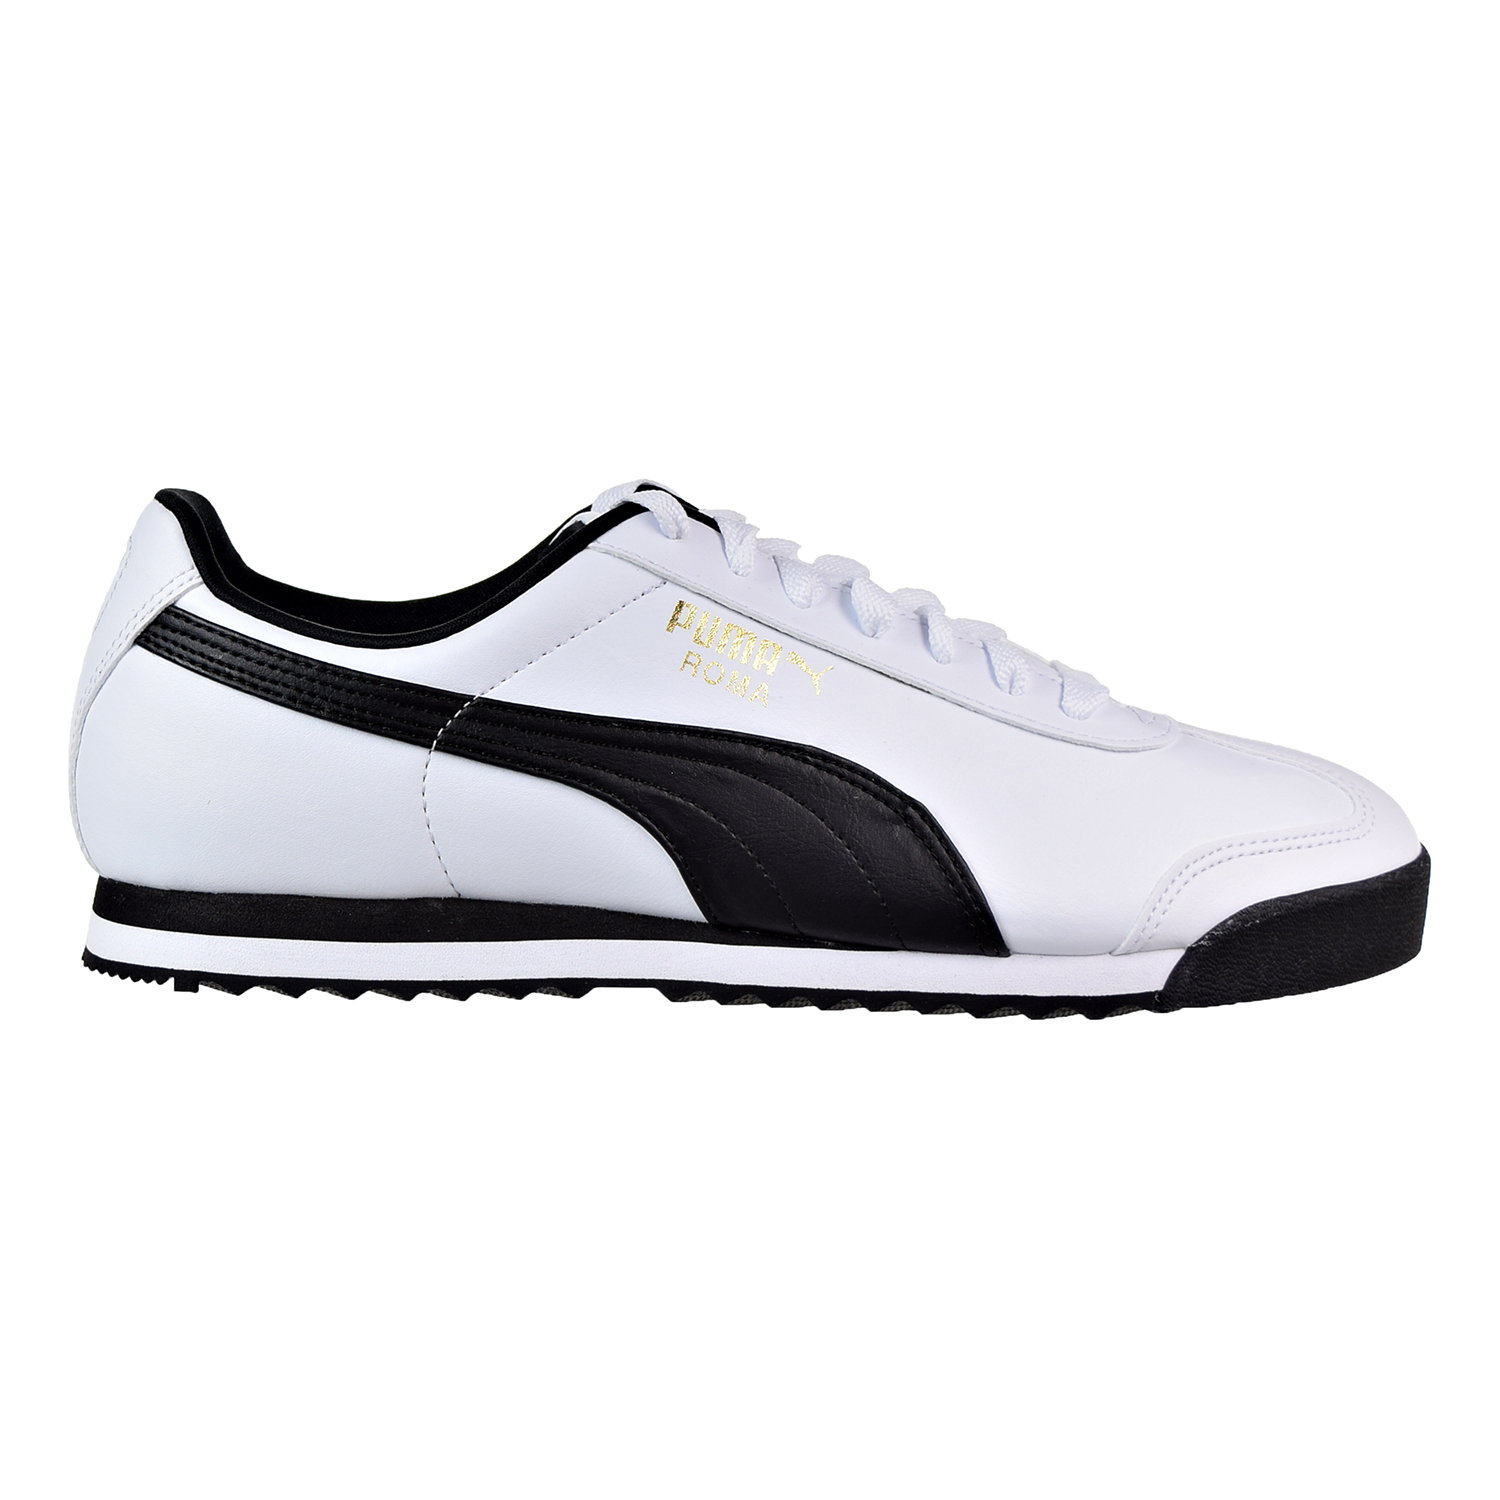 Puma Roma Basic Men's Shoes Puma White-Puma Black 353572-04 | eBay